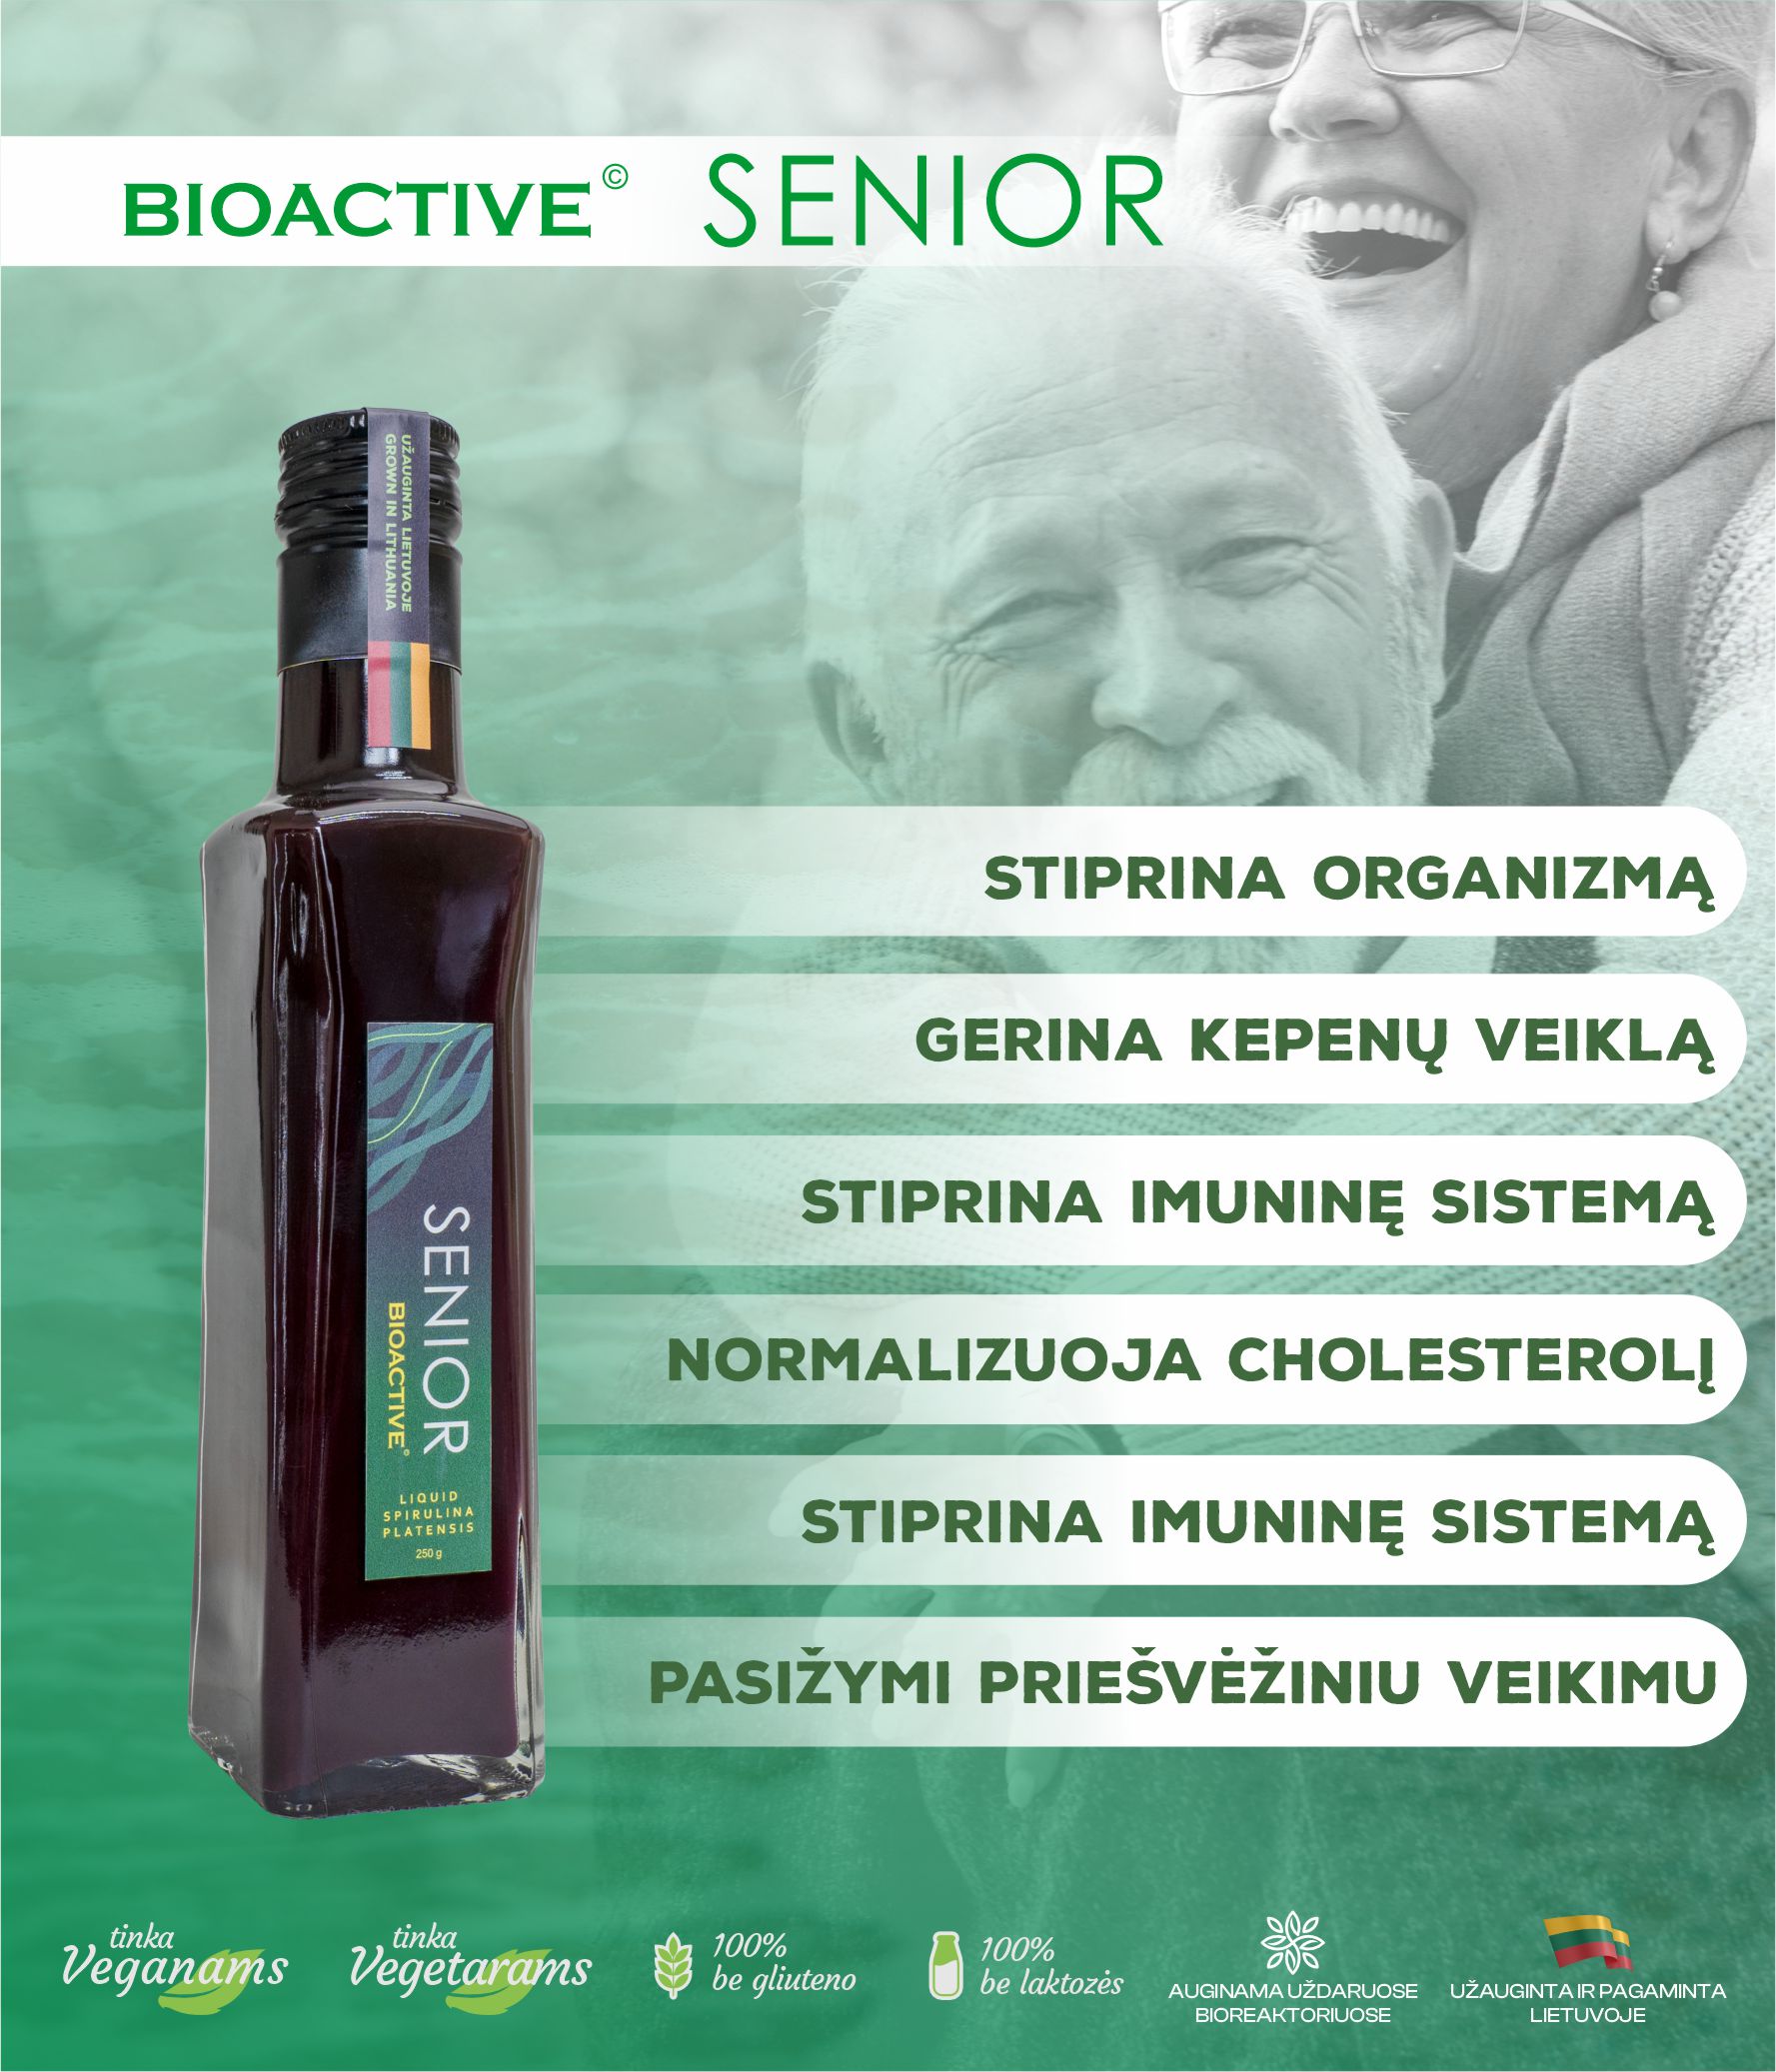 bioactive senior 01